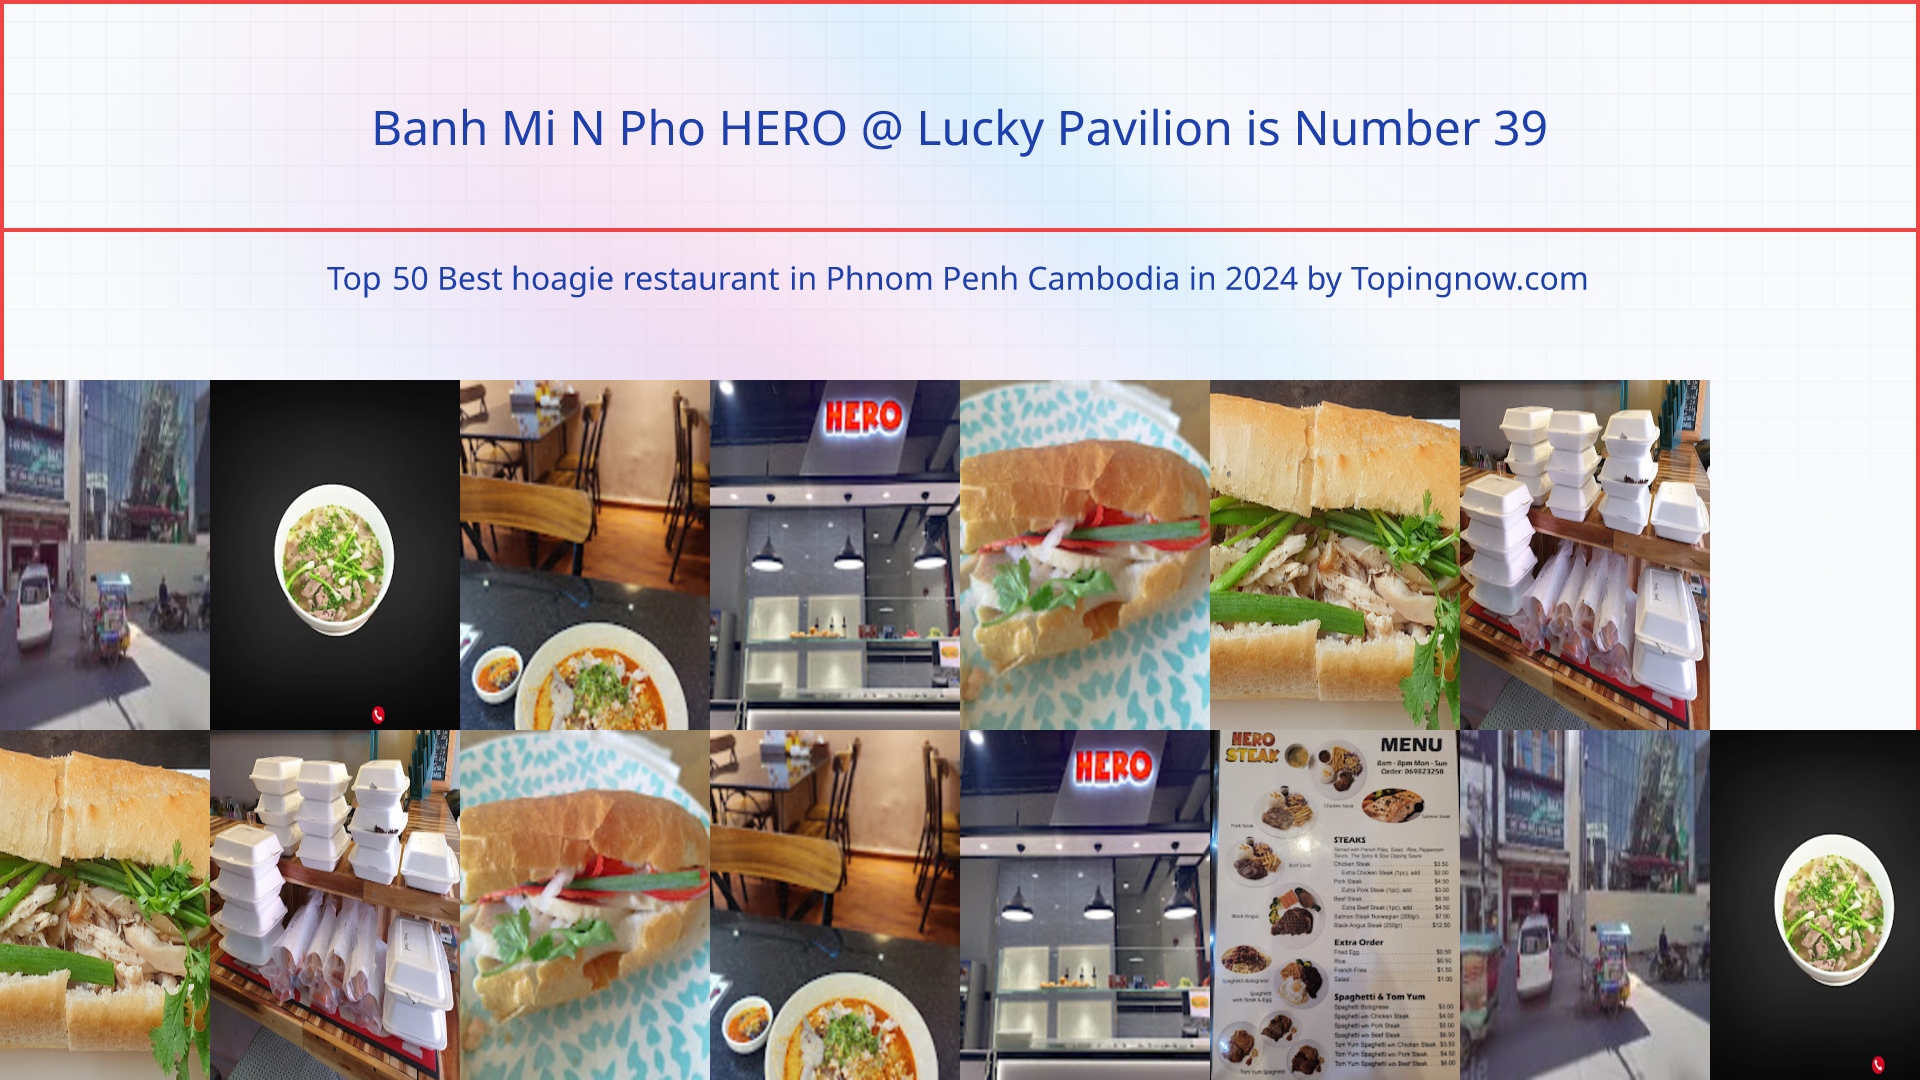 Banh Mi N Pho HERO @ Lucky Pavilion: Top 50 Best hoagie restaurant in Phnom Penh Cambodia in 2024